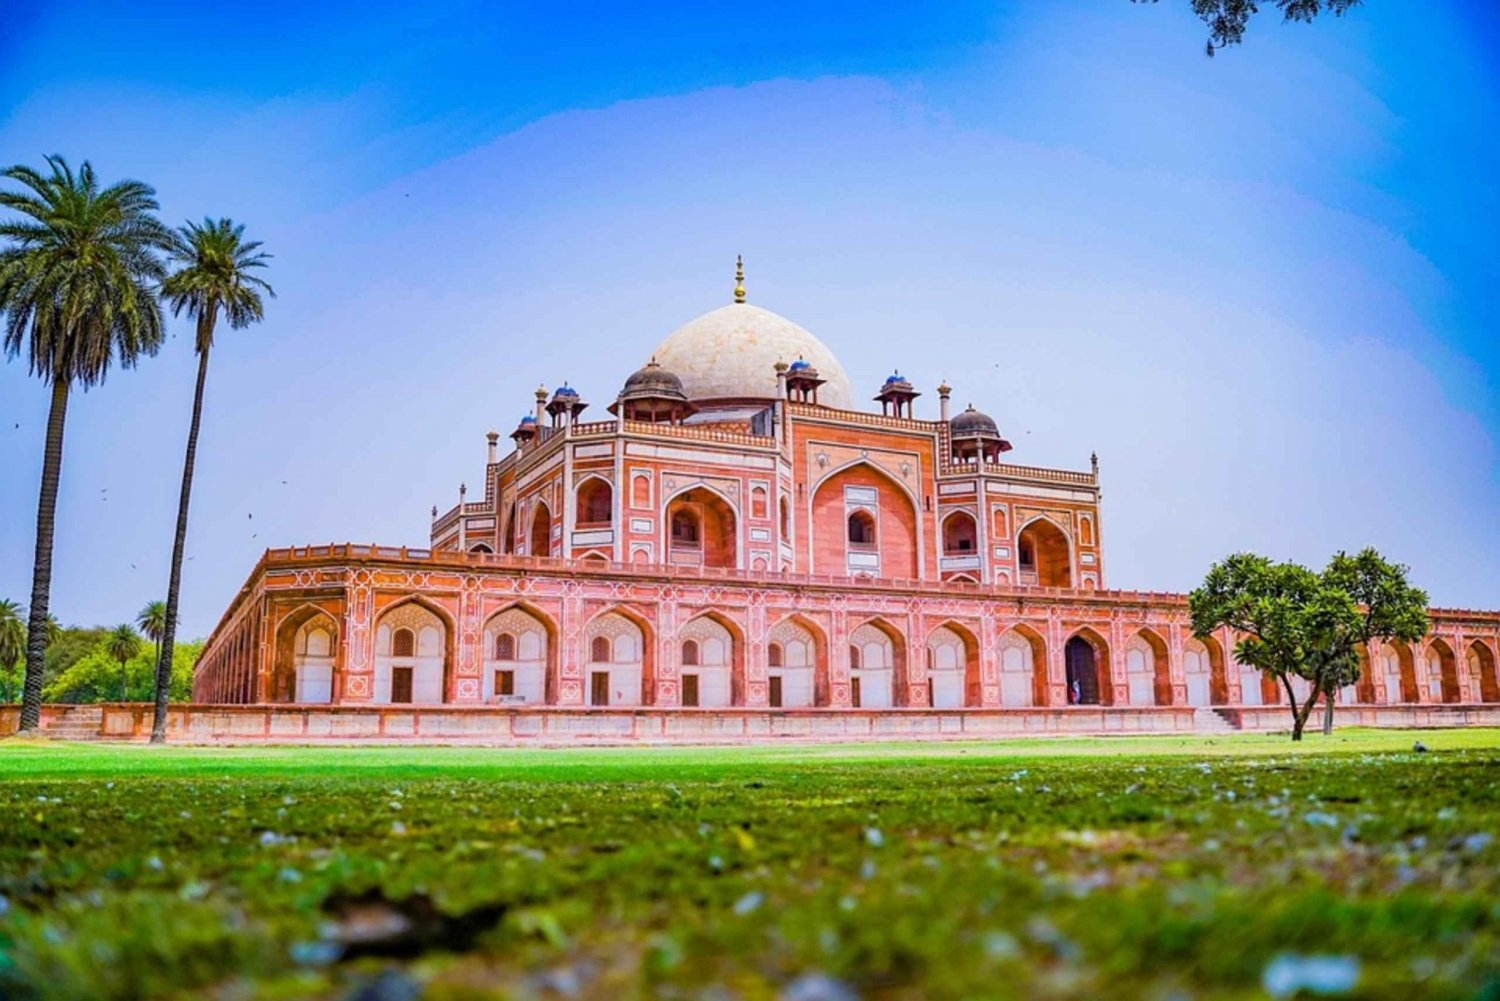 Delhi Agra Jaipur(Golden Triangle) Tour with hotel pickup